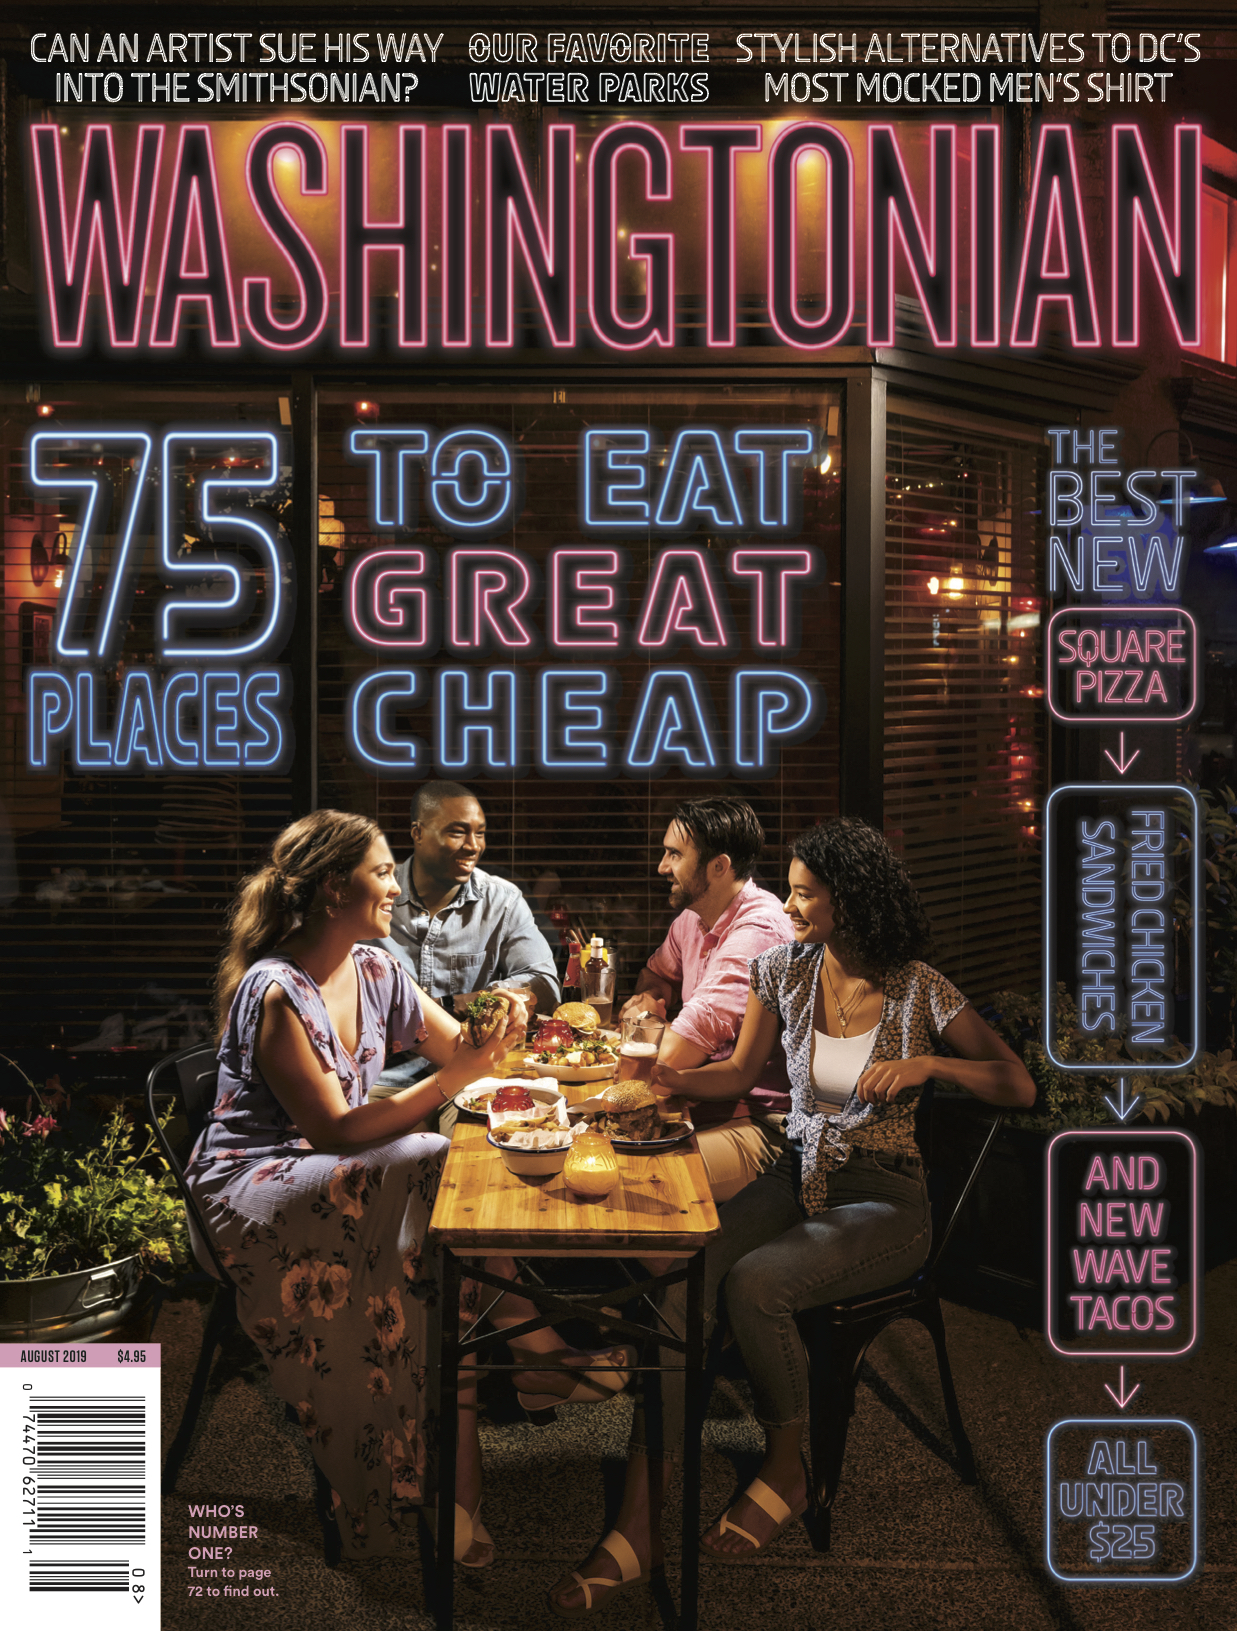 Scott Suchman's cover photograph for Washingtonian Magazine.